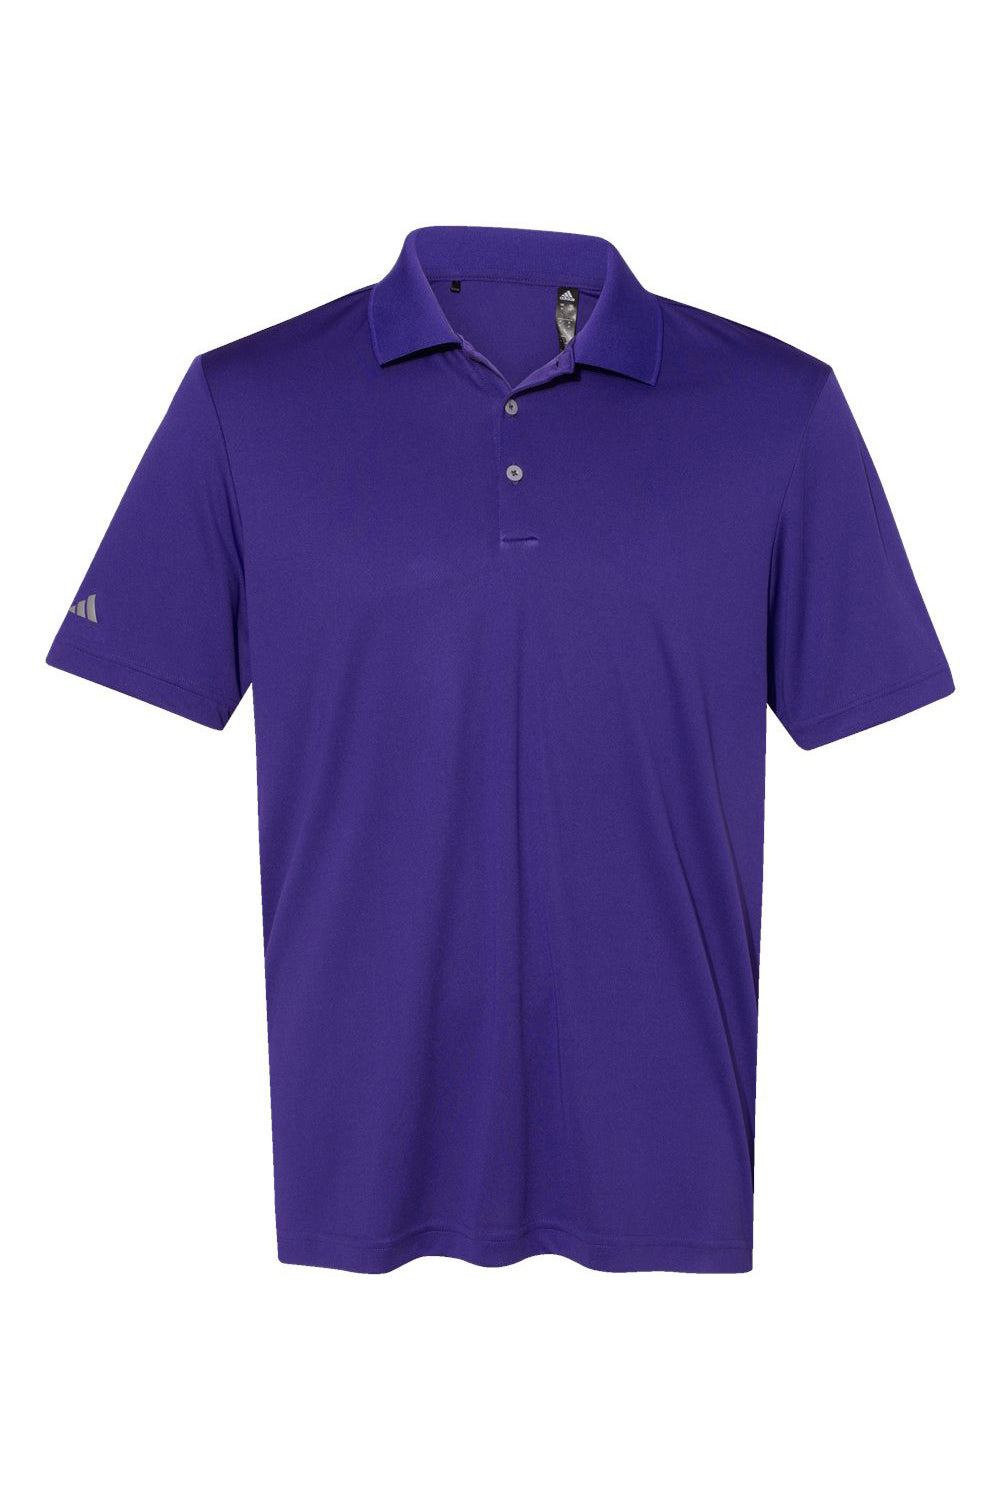 Adidas A230 Mens Performance UPF 50+ Short Sleeve Polo Shirt Collegiate Purple Flat Front